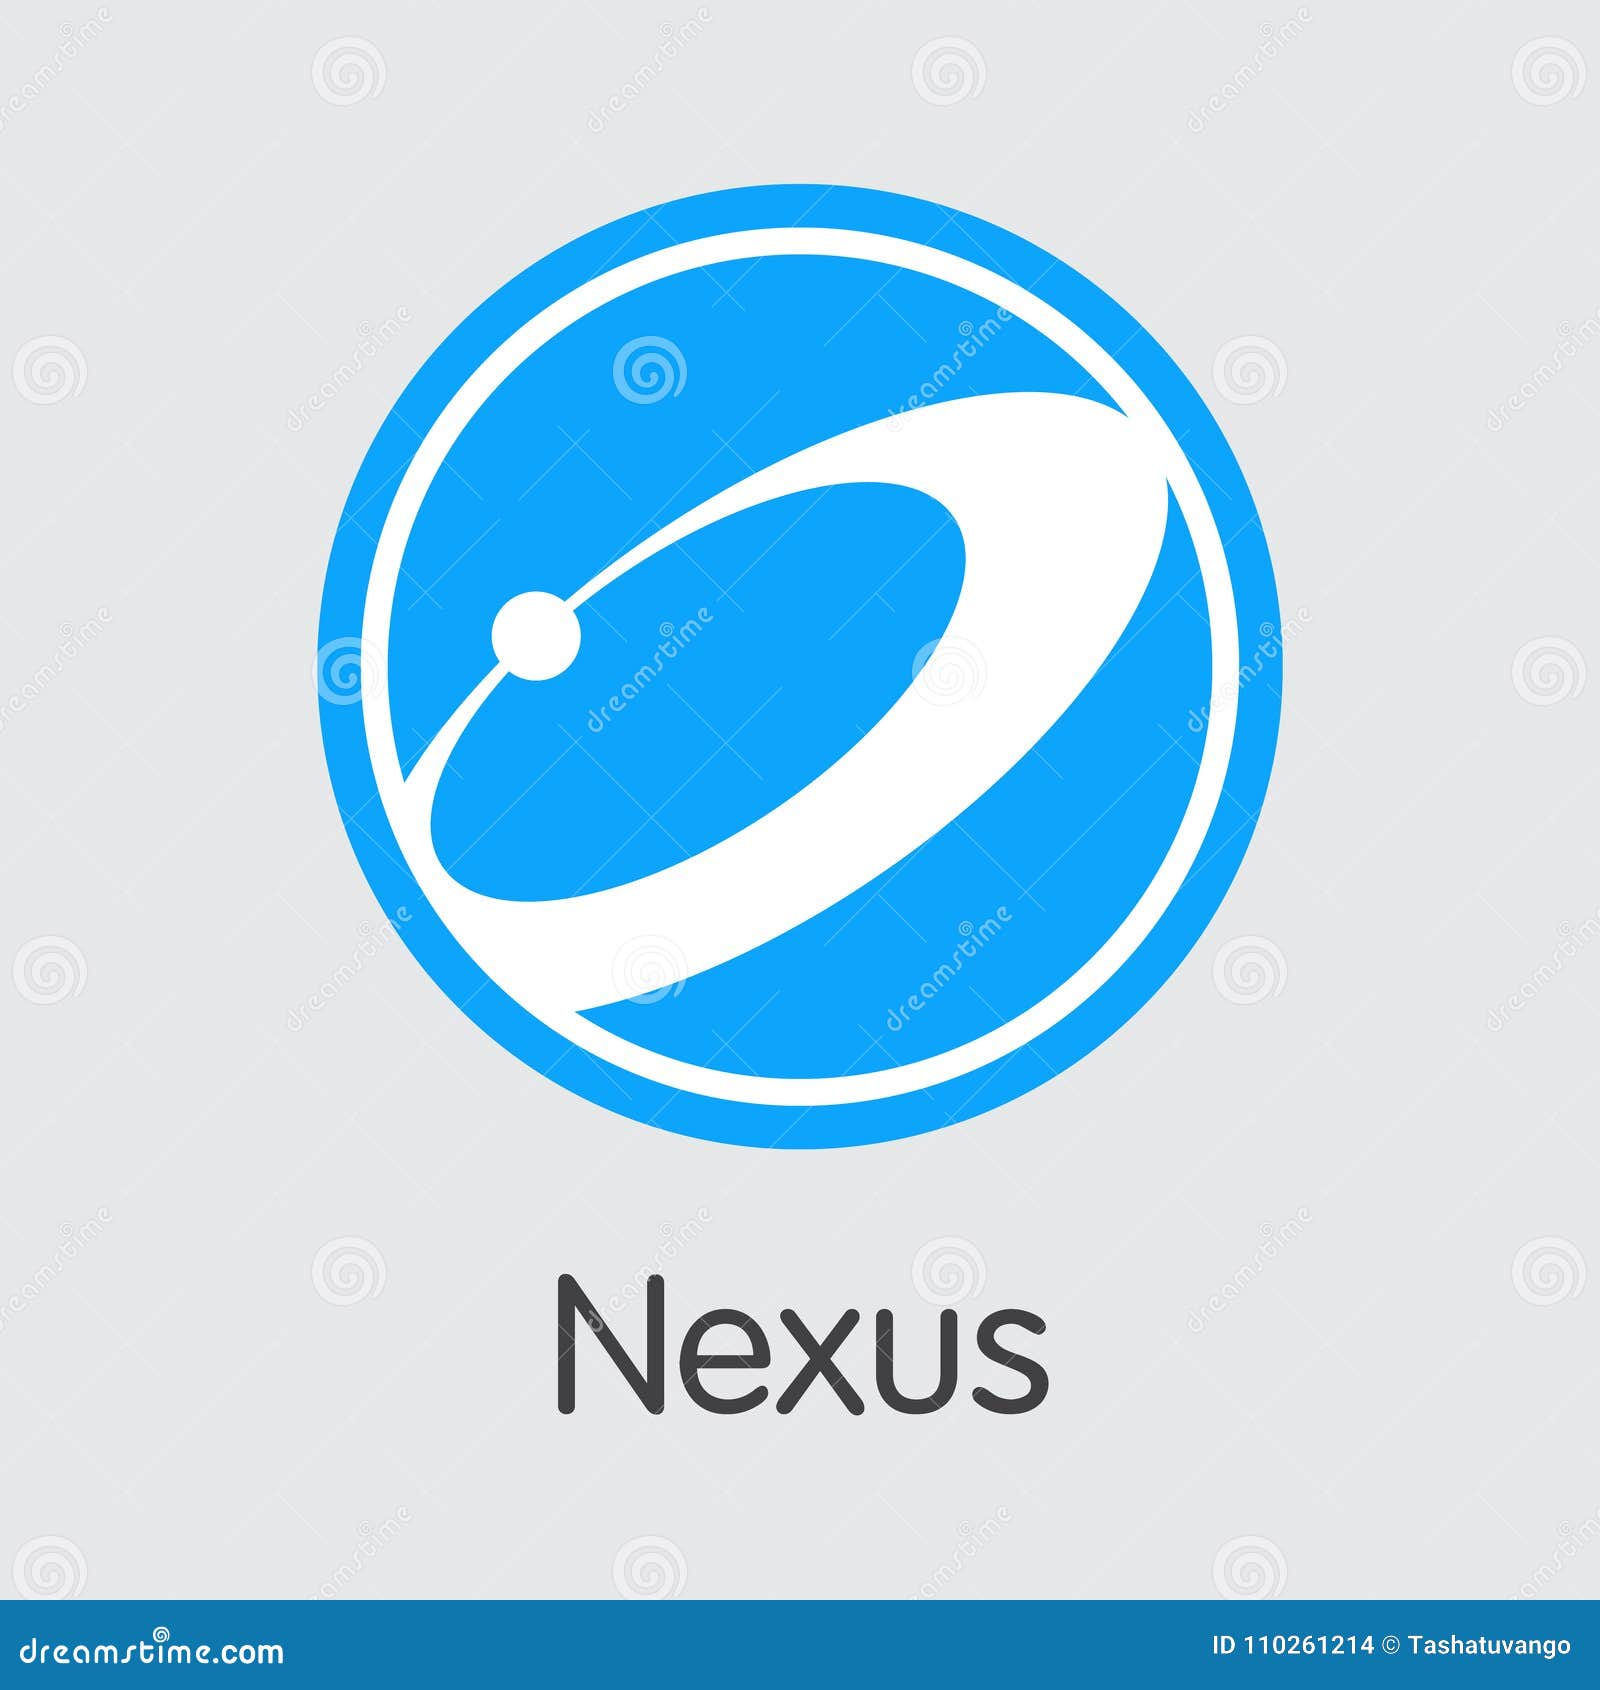 nexus digital currency -  trading sign.